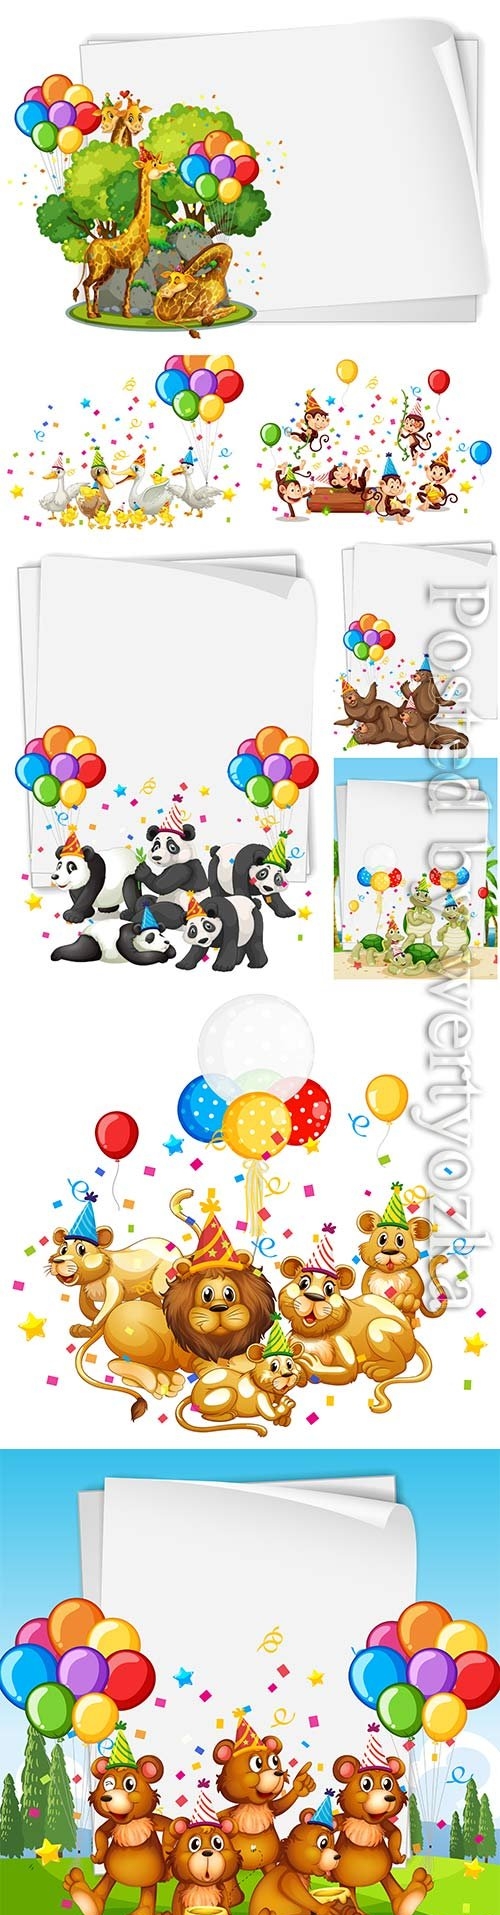 Cute animals in party theme premium vector